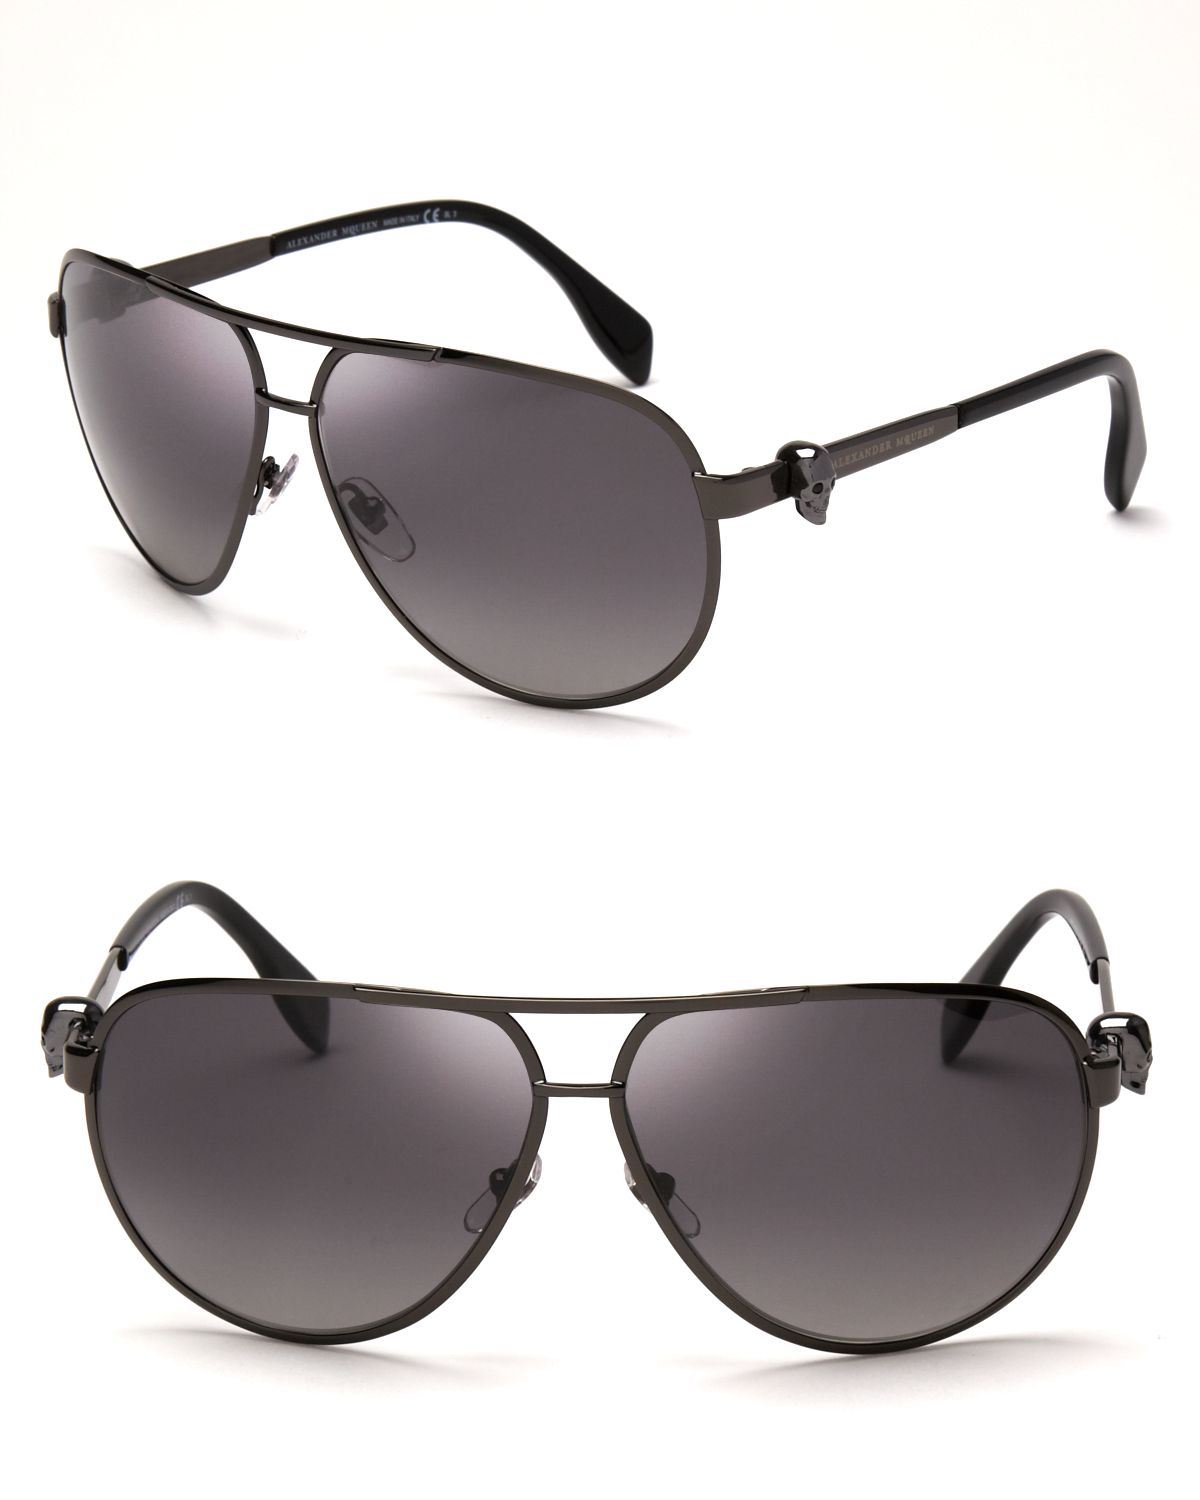 Alexander McQueen Skull Temple Aviator Sunglasses in Black - Lyst